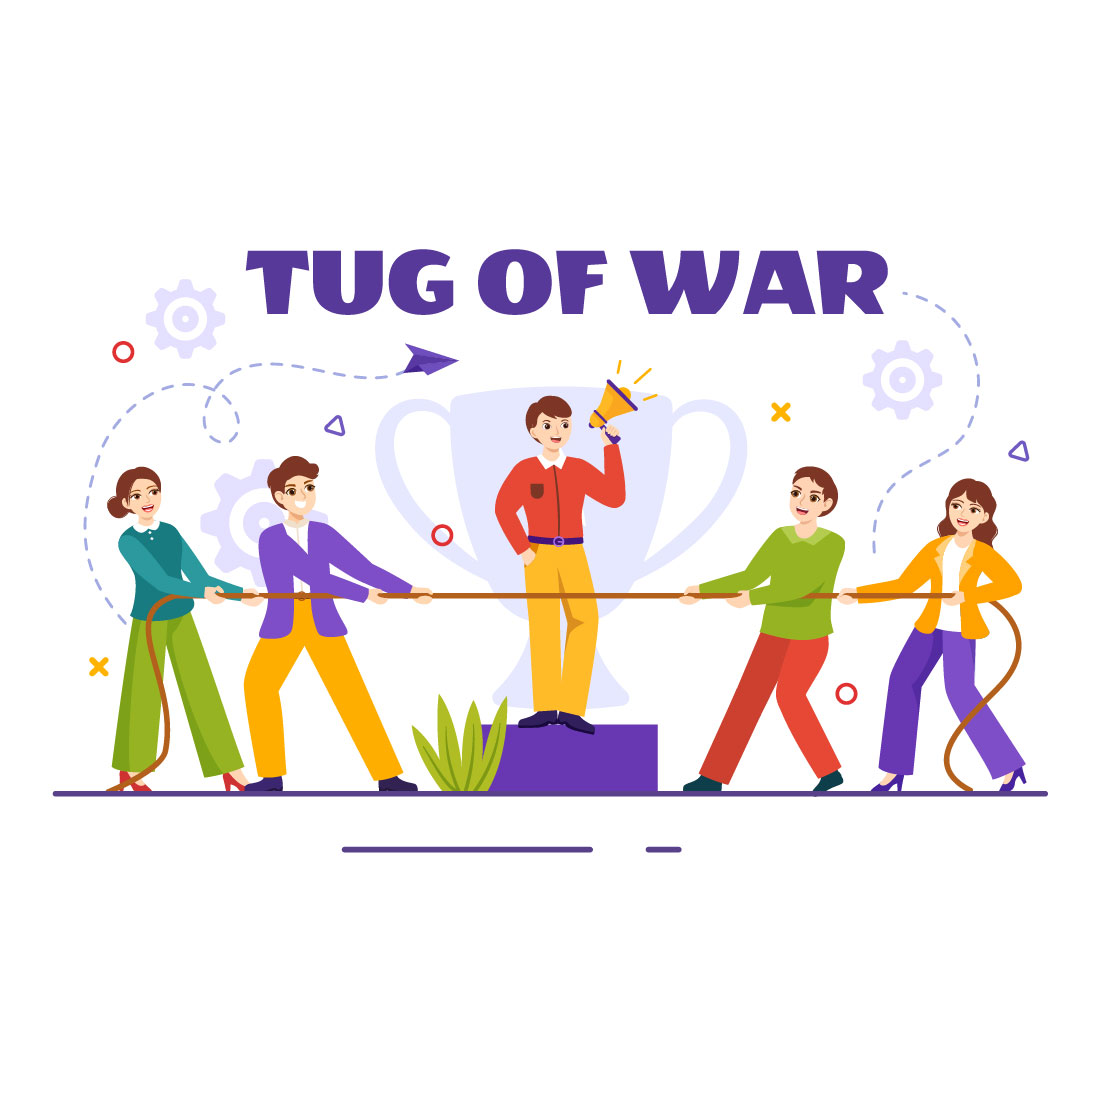 8 Tug of War Vector Illustration cover image.